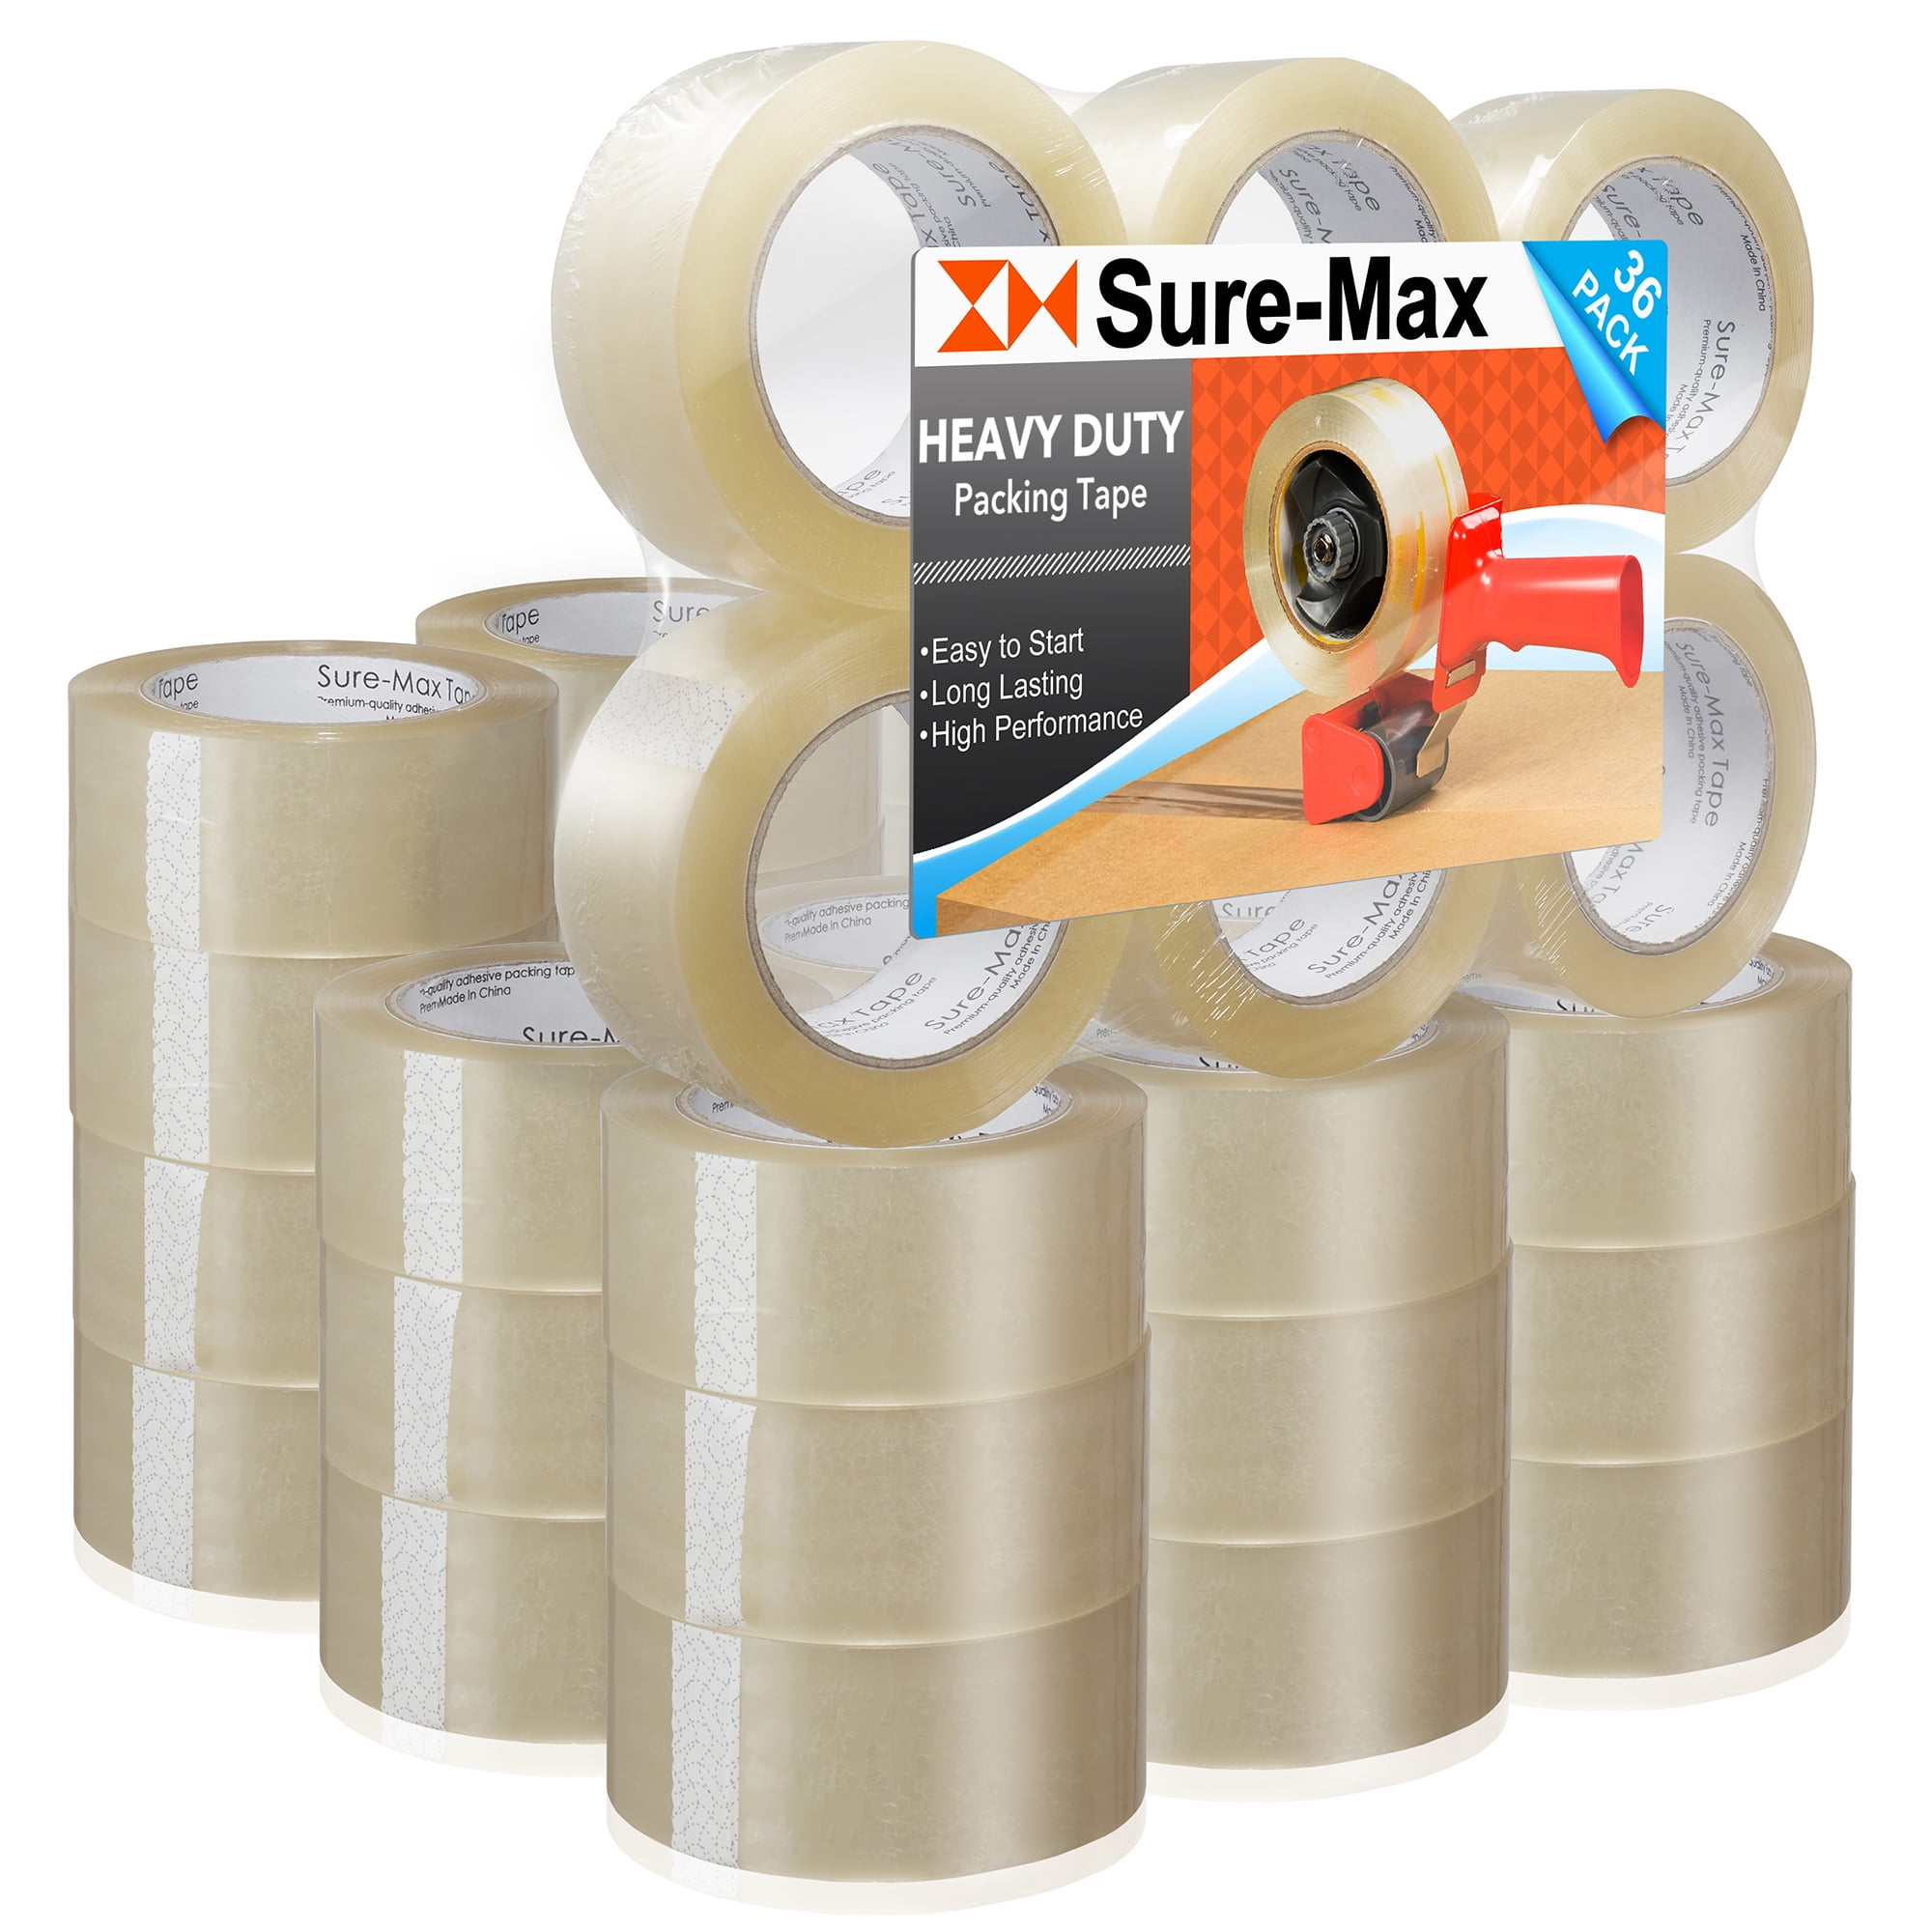 2 Rolls Tape for Bulk Film Loading (20mm x 66m) Free-shipping